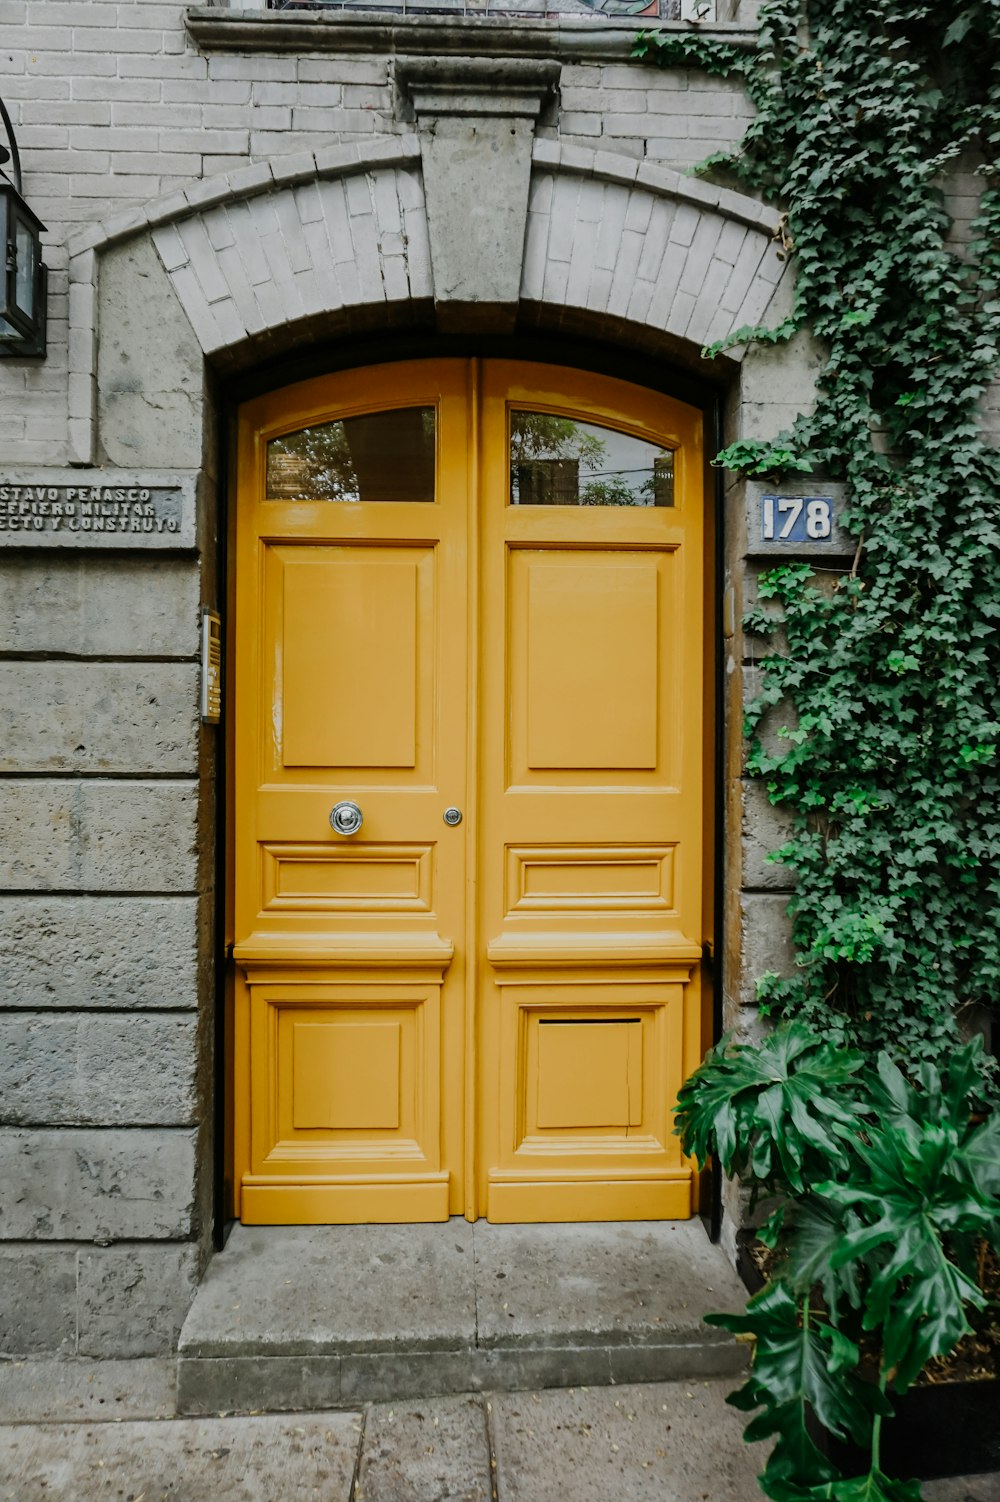 a yellow door is open on a brick building